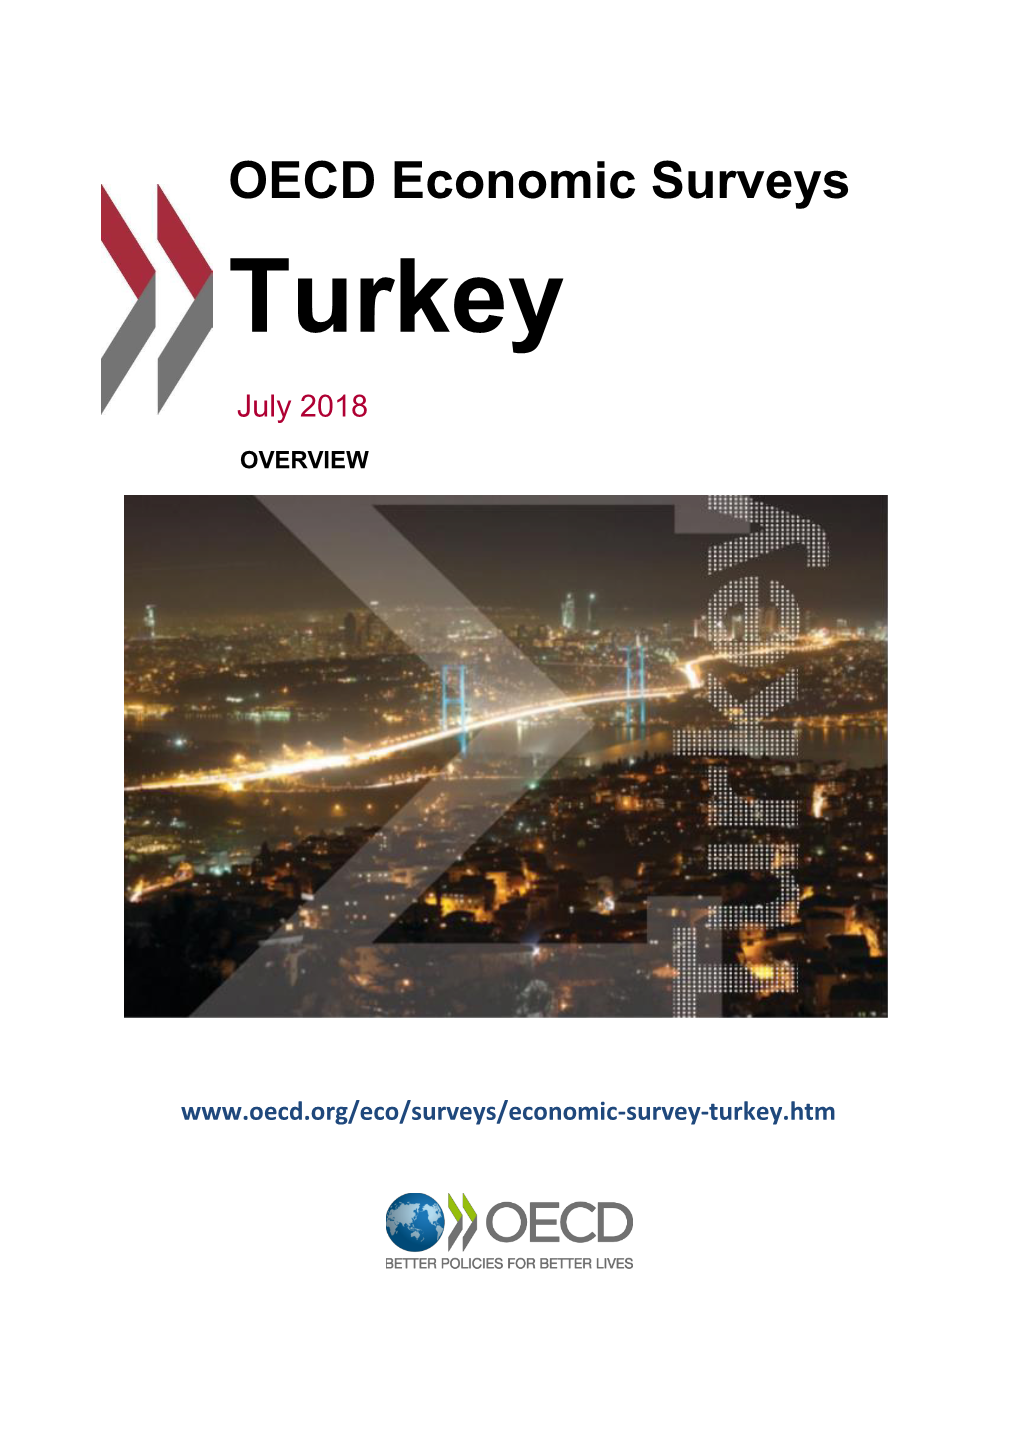 OECD Economic Surveys Turkey OVERVIEW